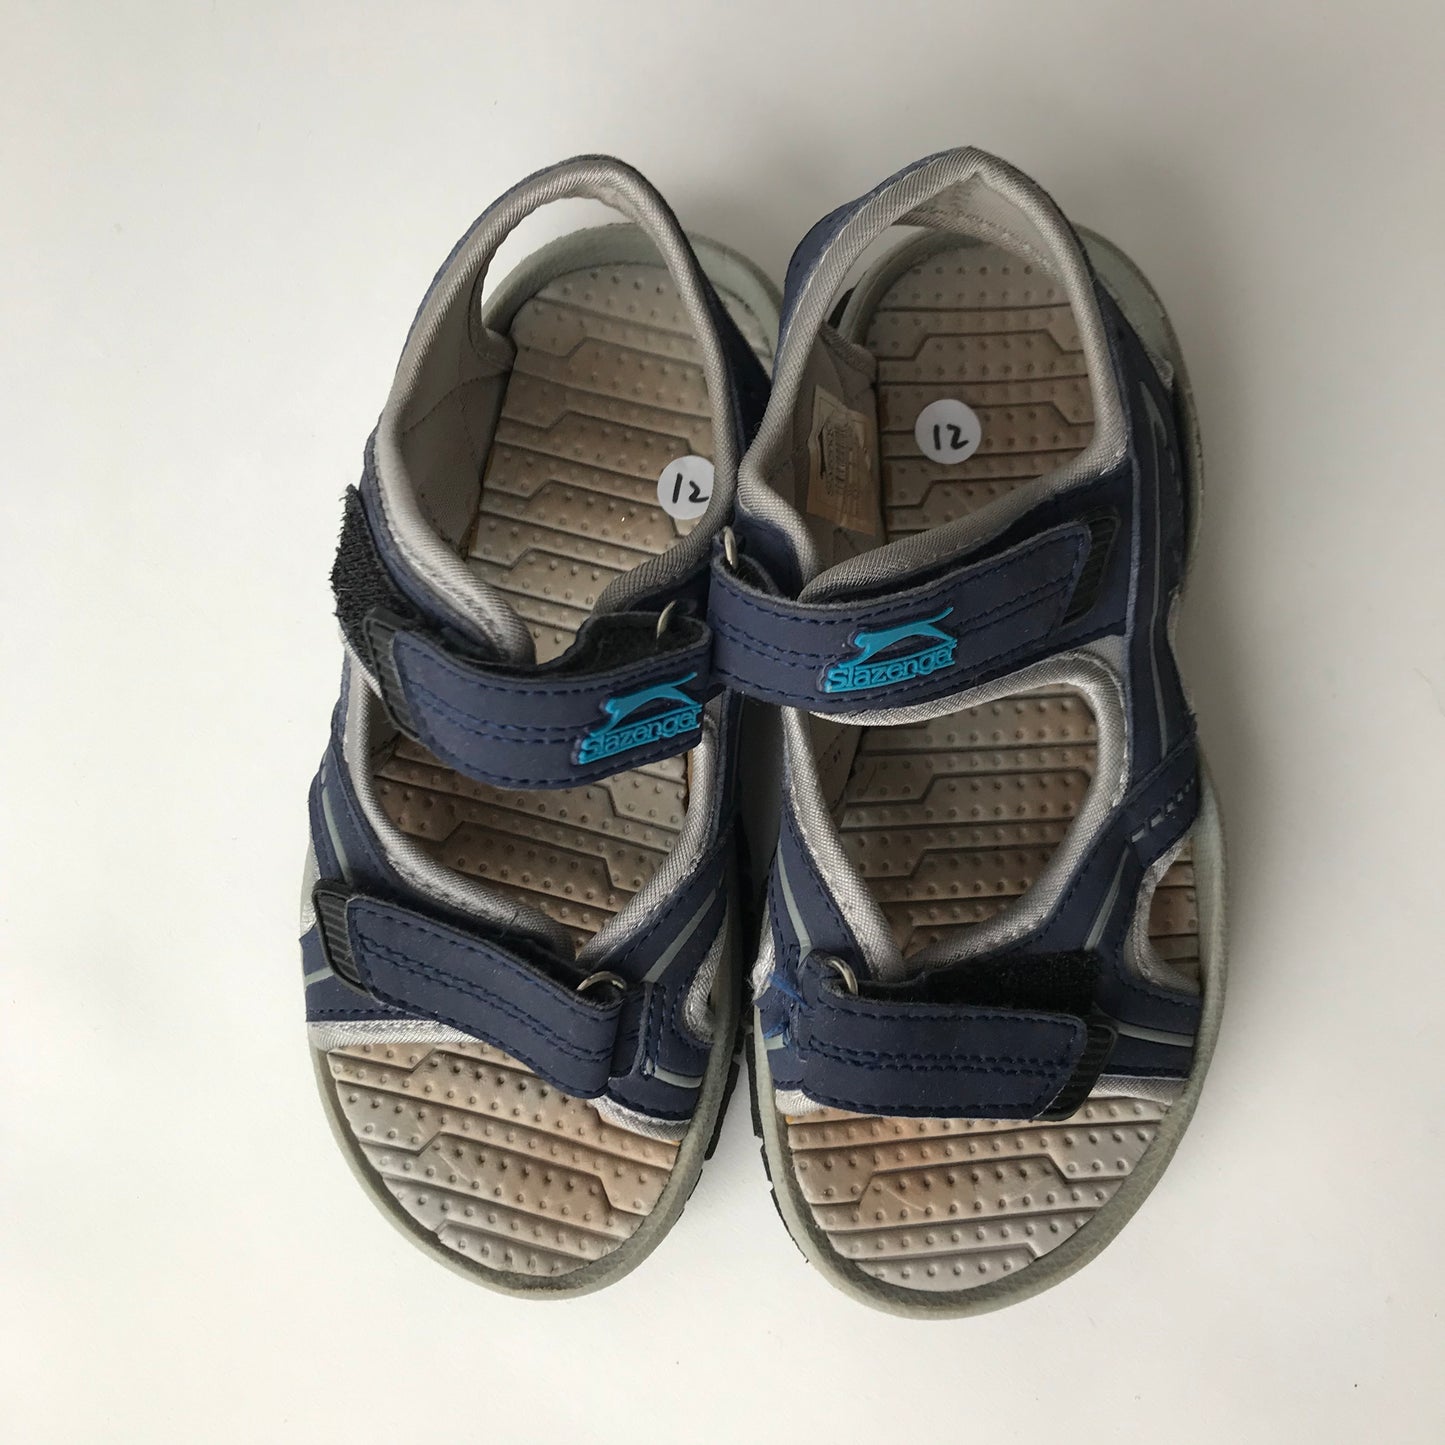 Slazenger Blue Sandals Shoe Size 12 (jr)